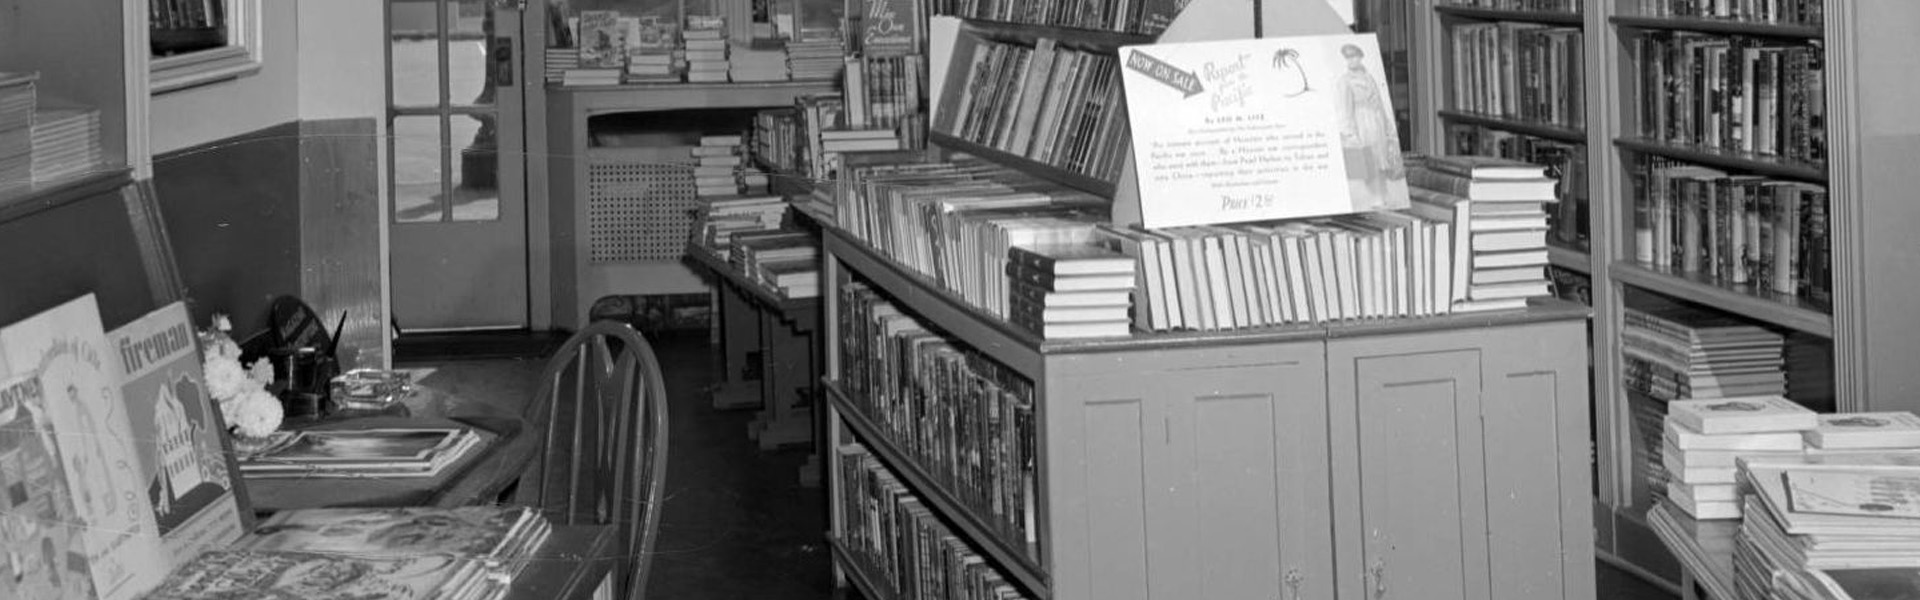 Meridian Book Shop, 1946